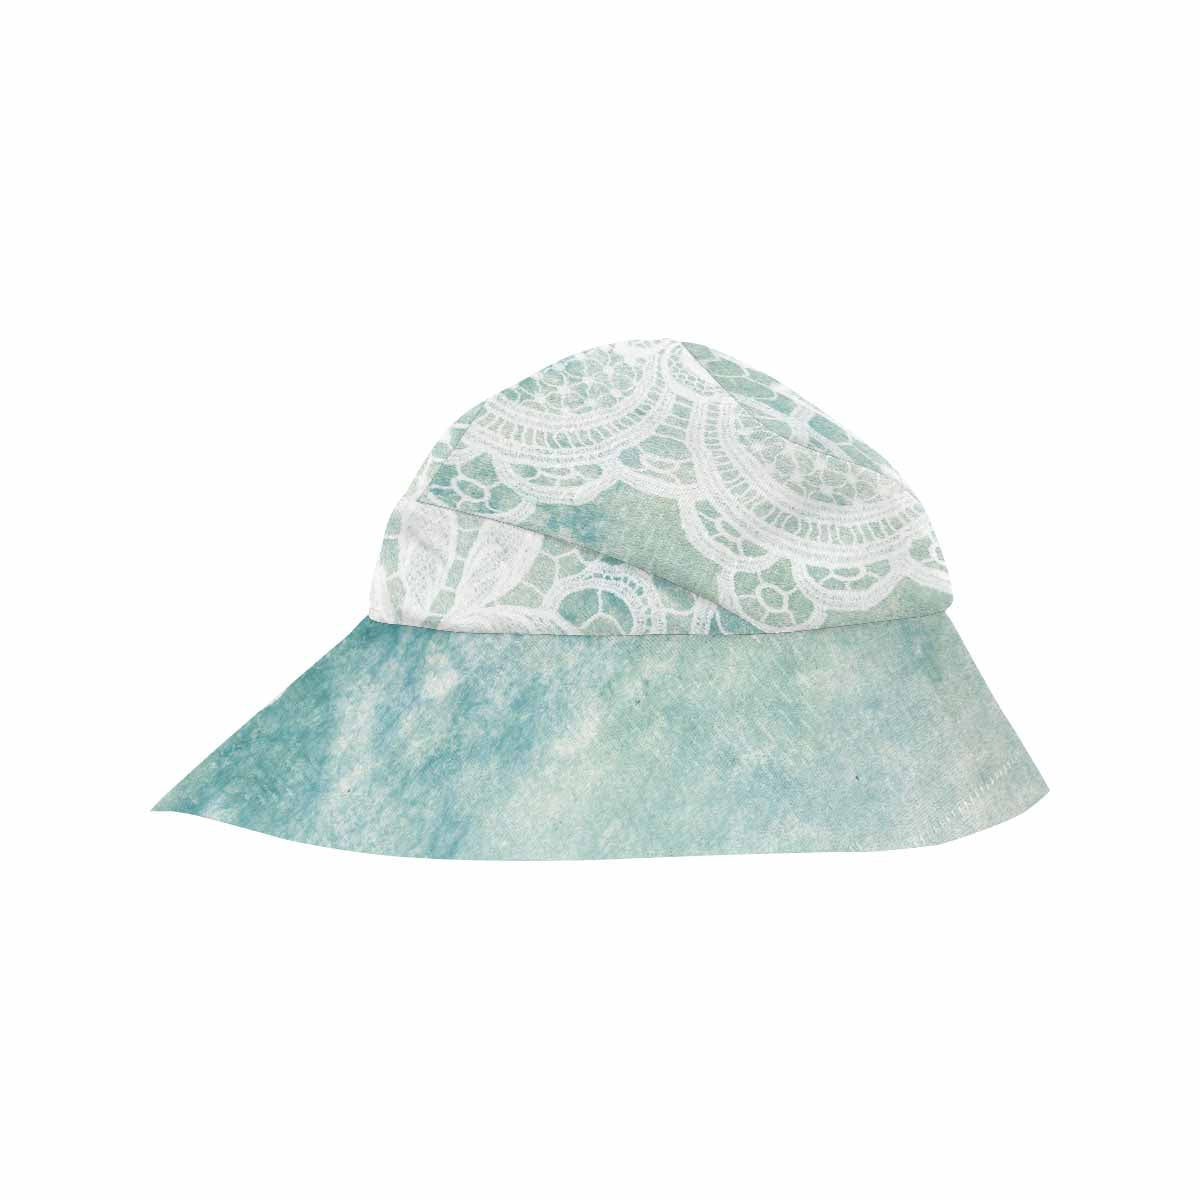 Victorian lace print, wide brim sunvisor Hat, outdoors hat, design 41